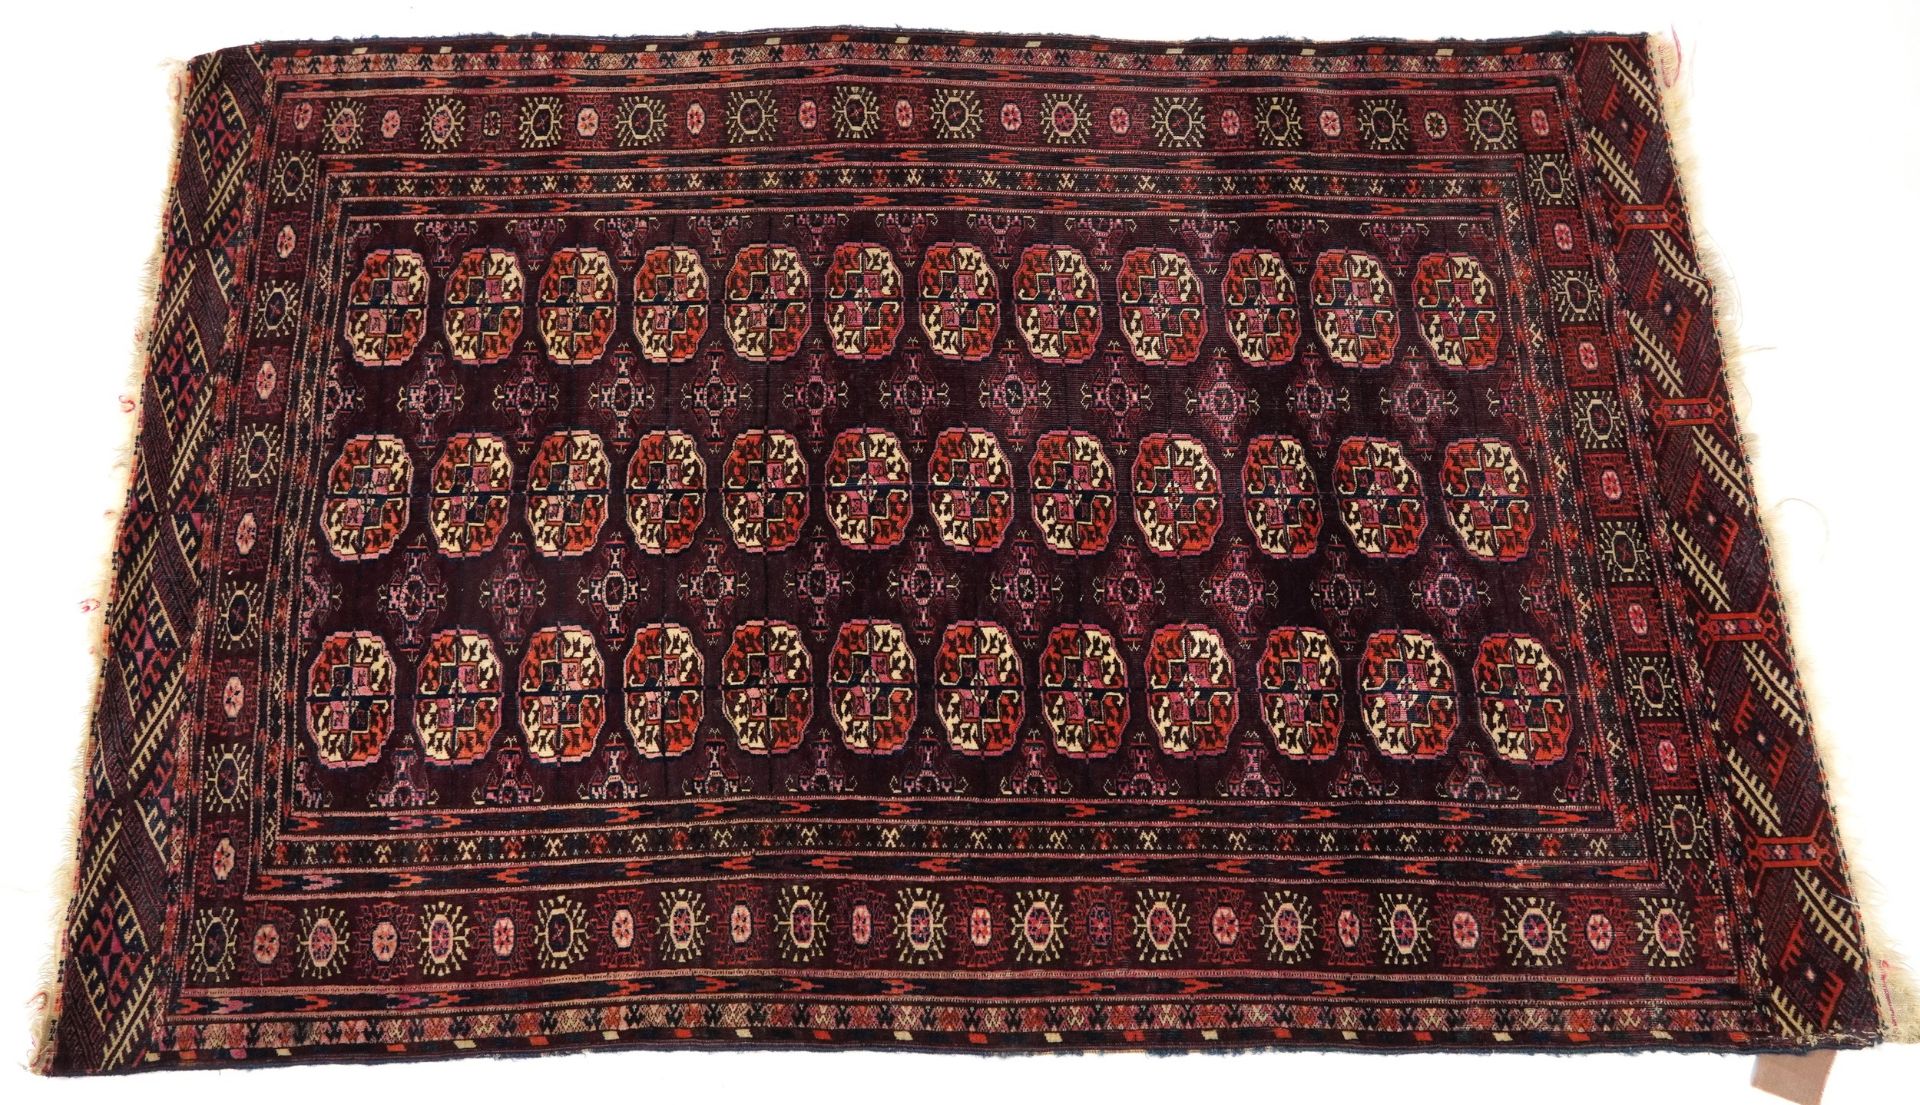 Rectangular Bokara red and blue ground rug with all over geometric design, 190cm x 126cm